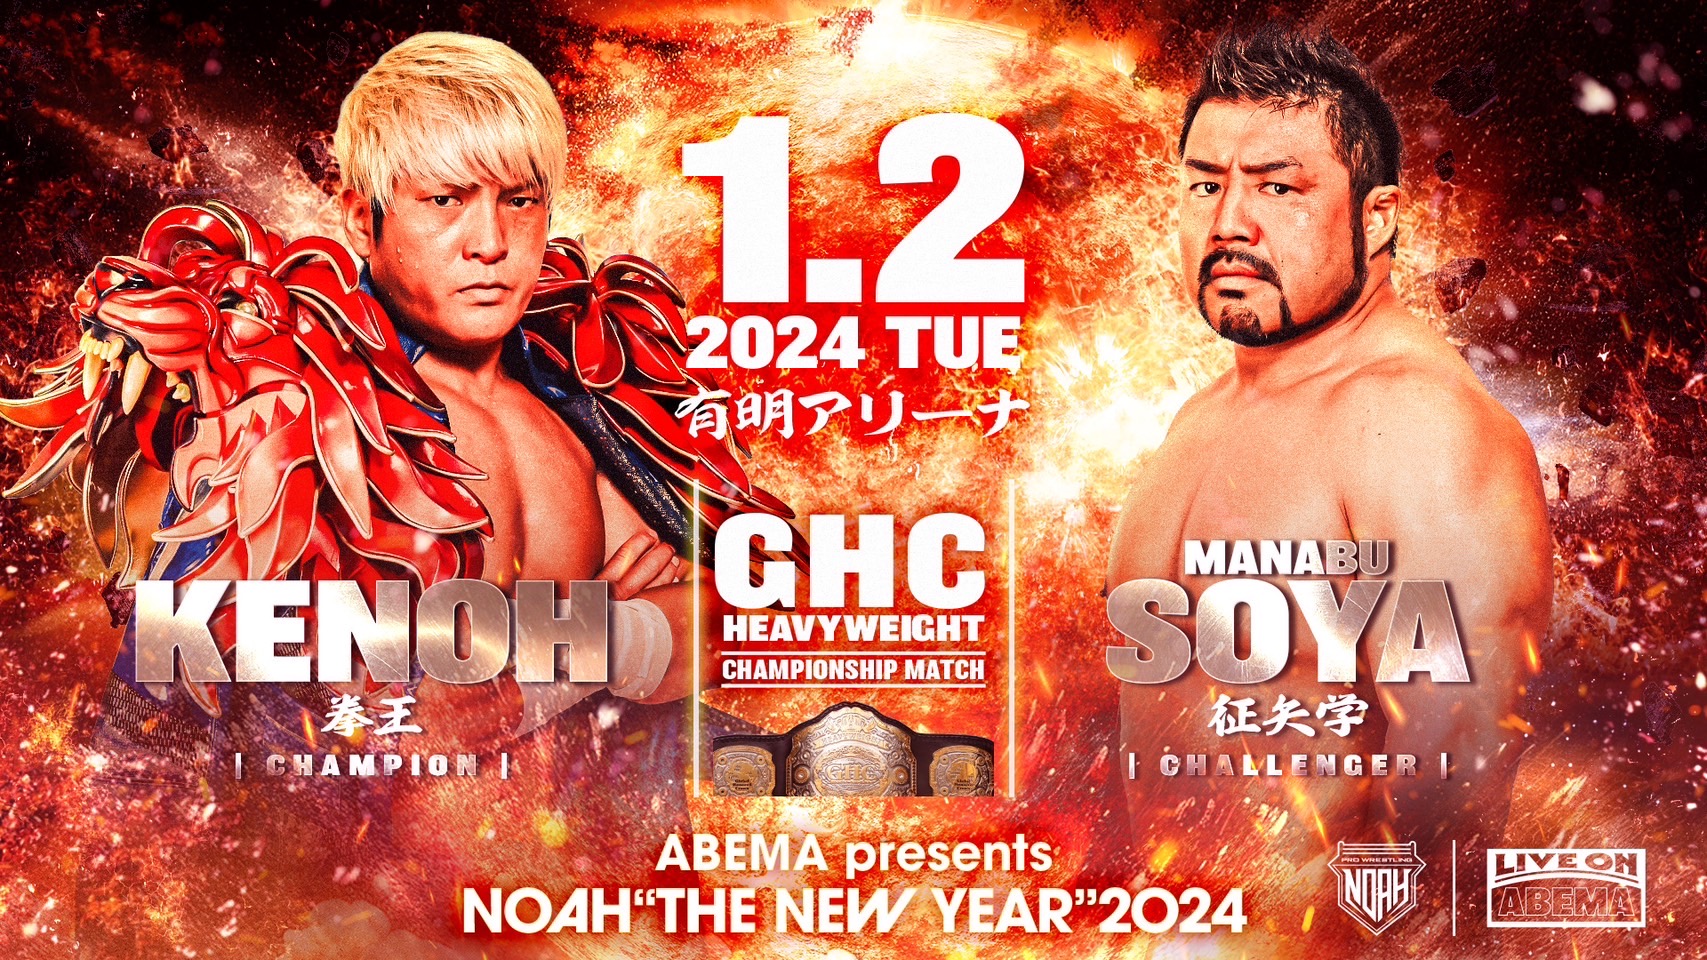 Pro Wrestling NOAH’s NOAH “THE NEW YEAR” 2024 Full Match Lineup (1/2/2024)